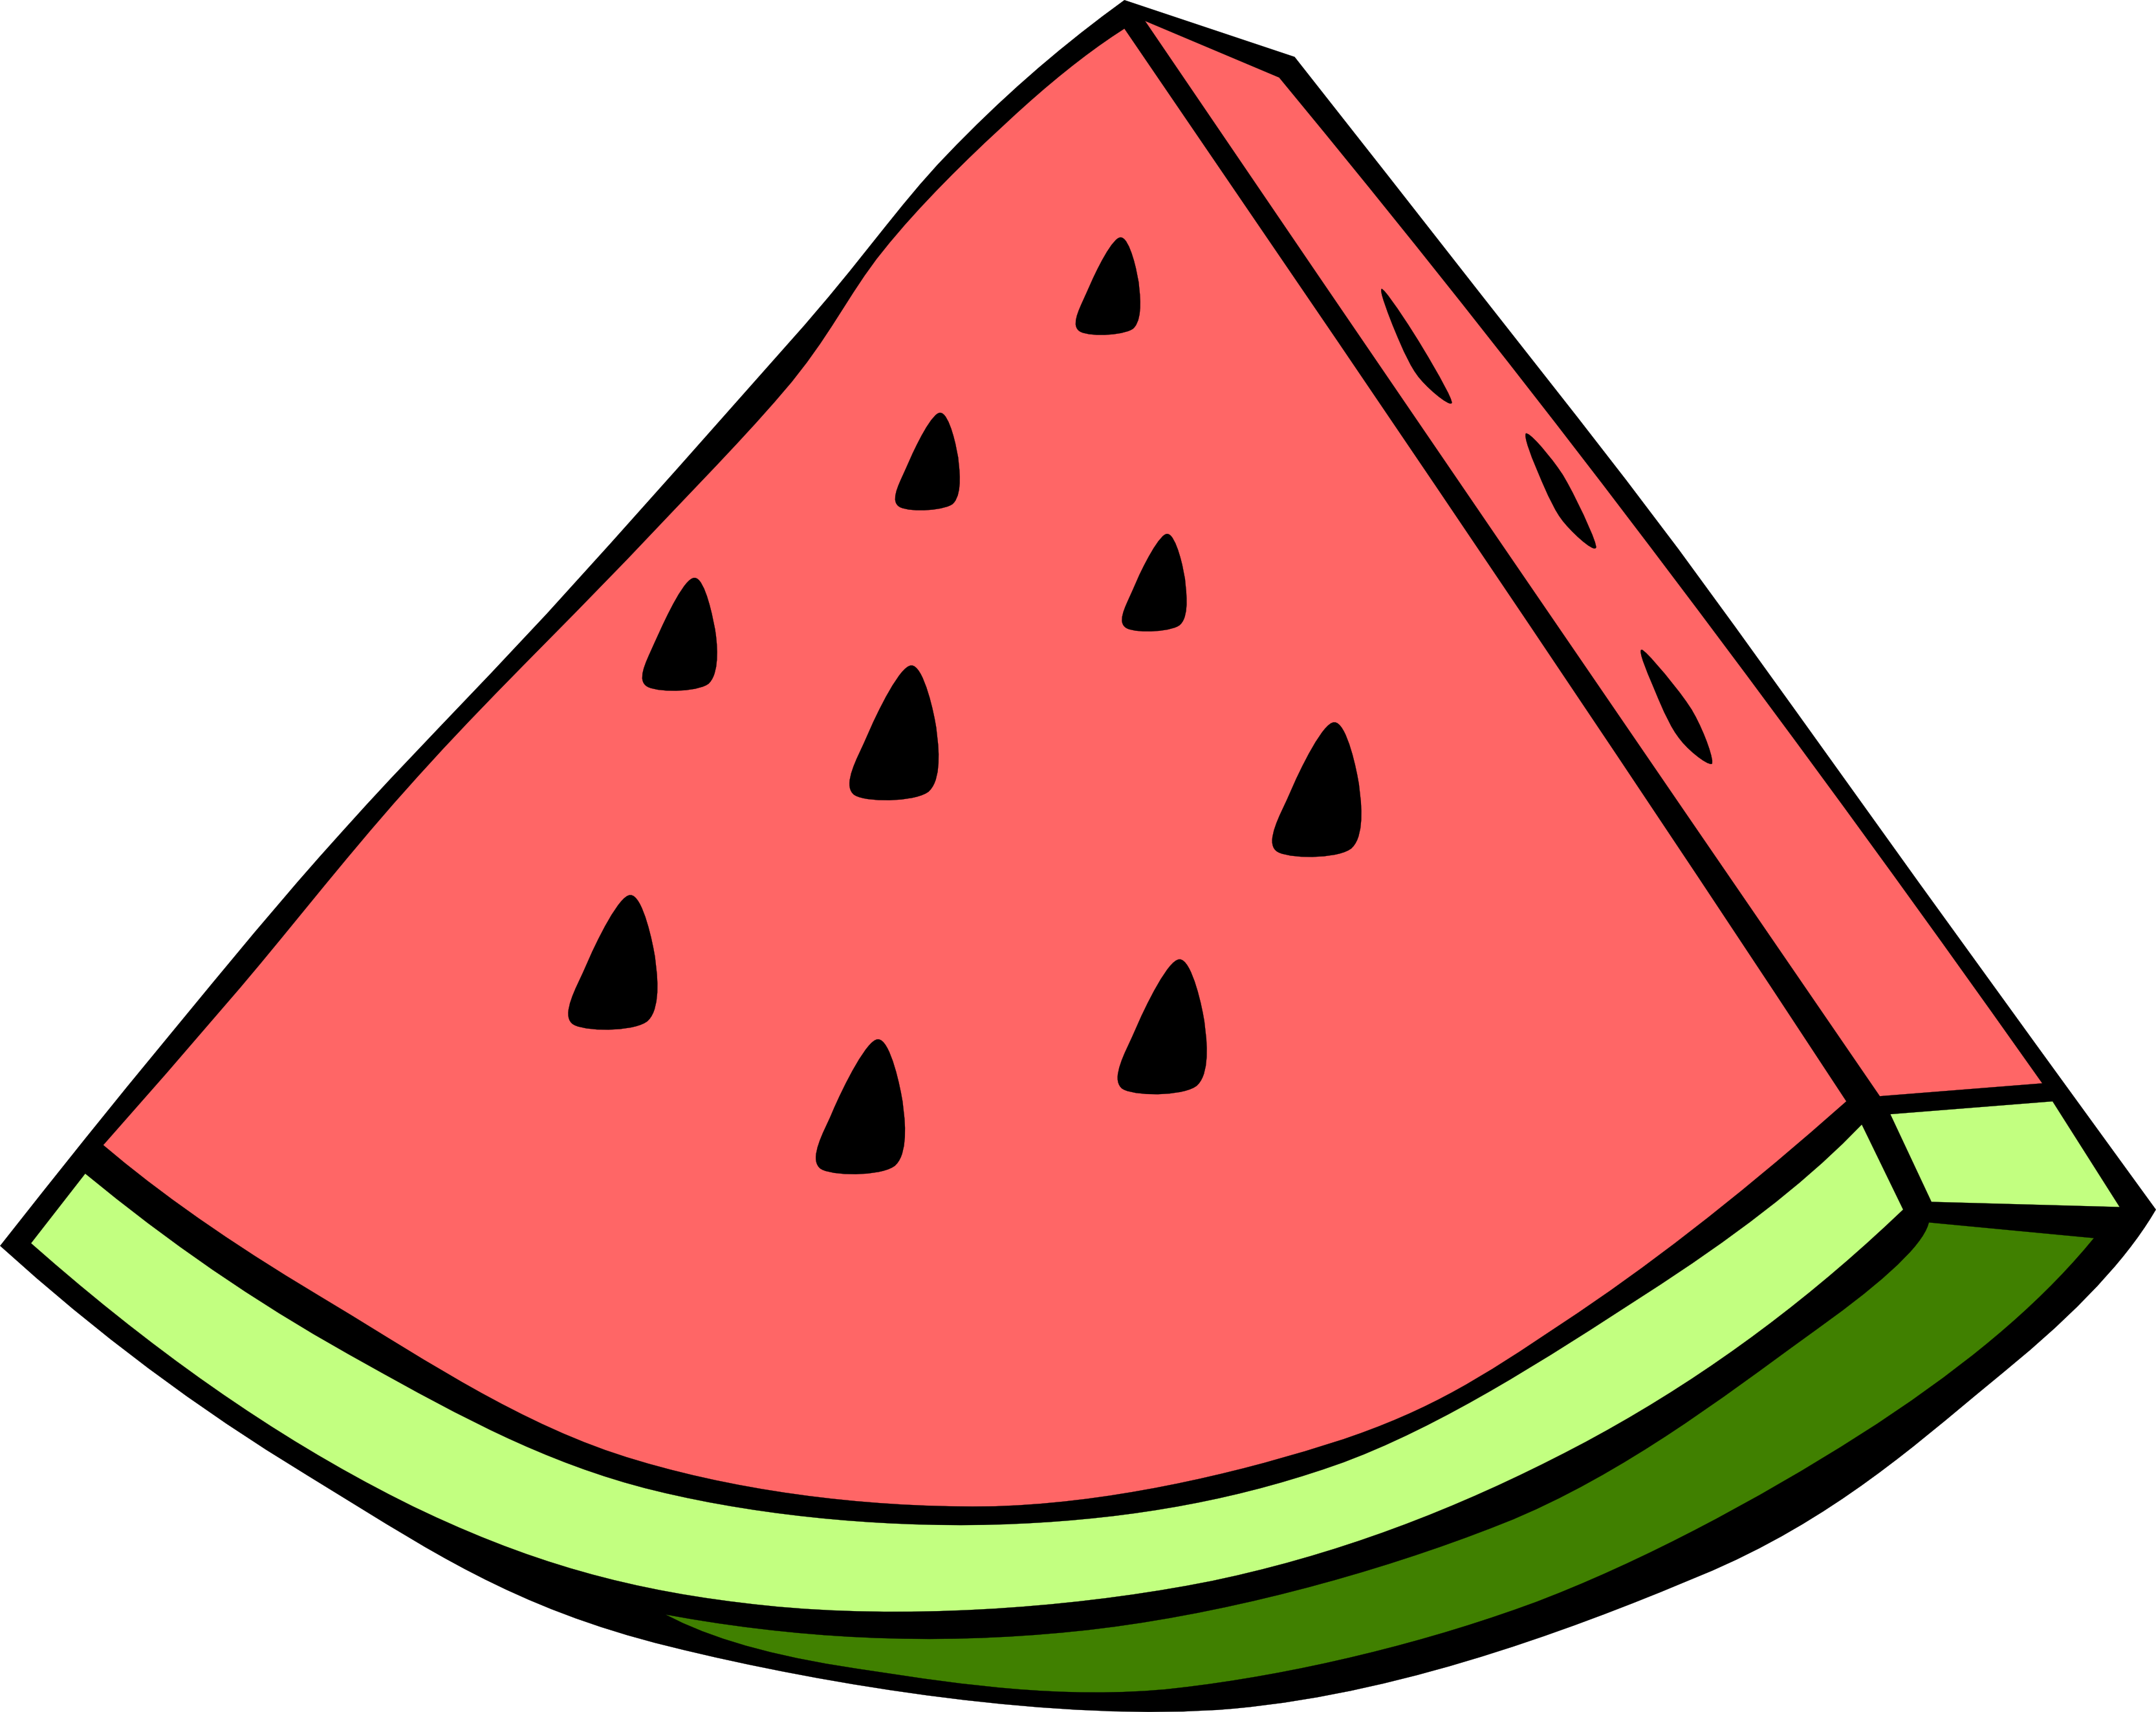 Watermelon clipart hello summer. Mutiny kids love watermeloncartoon